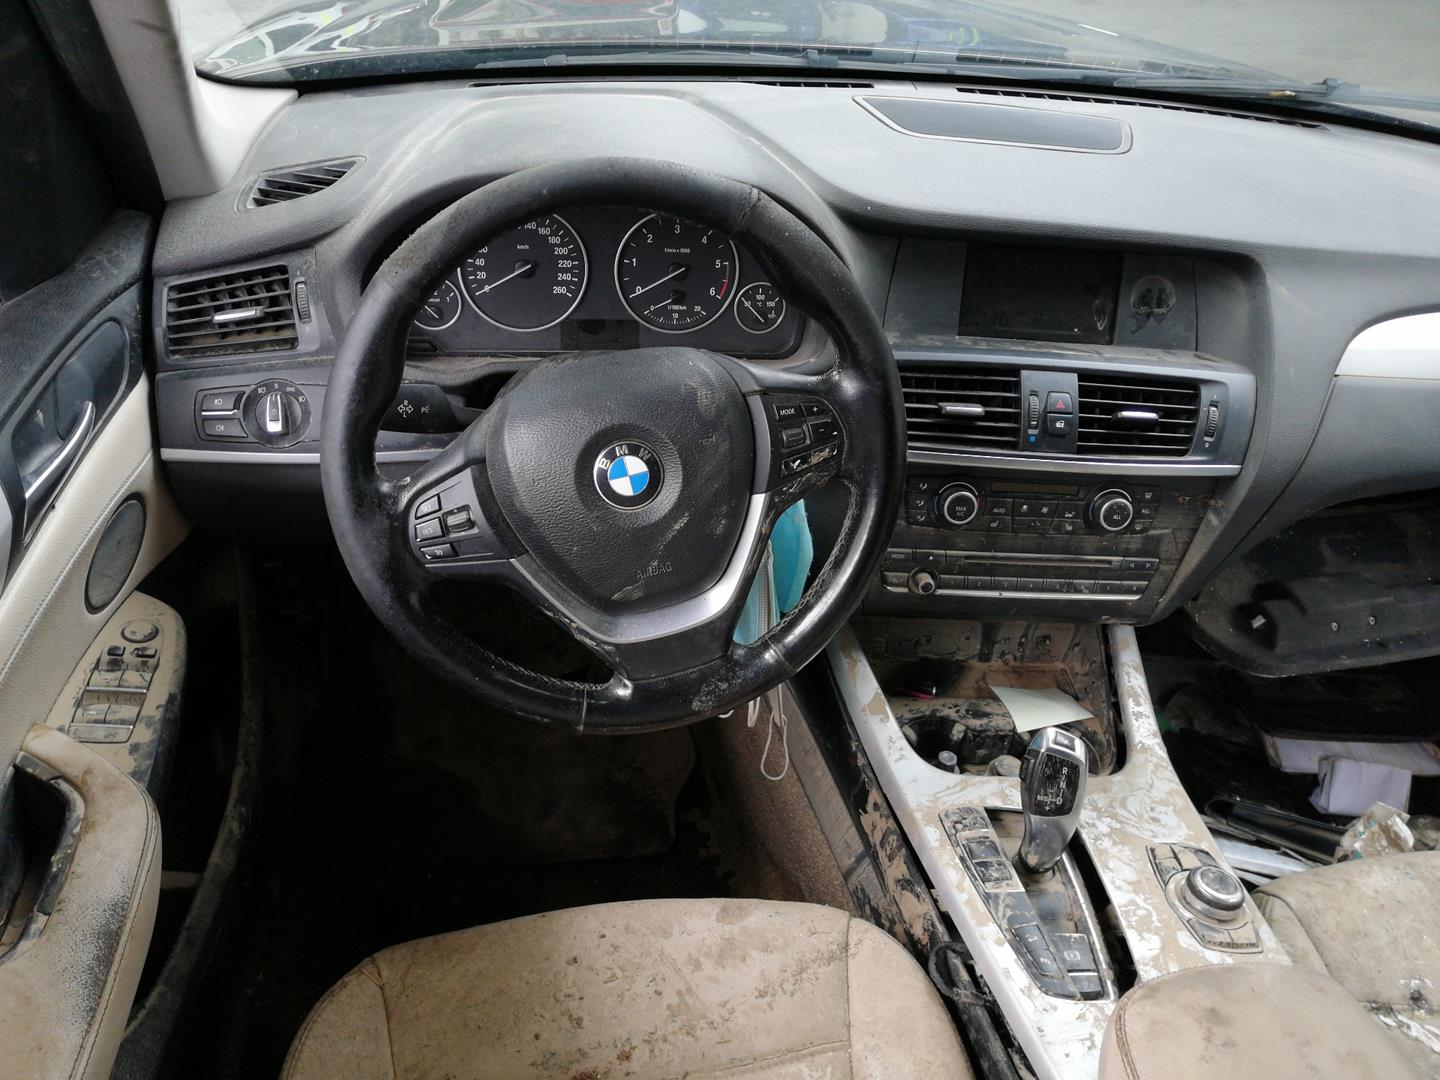 BMW X4 F26 (2014-2018) Xenon Light Control Unit 7356250, 130732946100 22780124